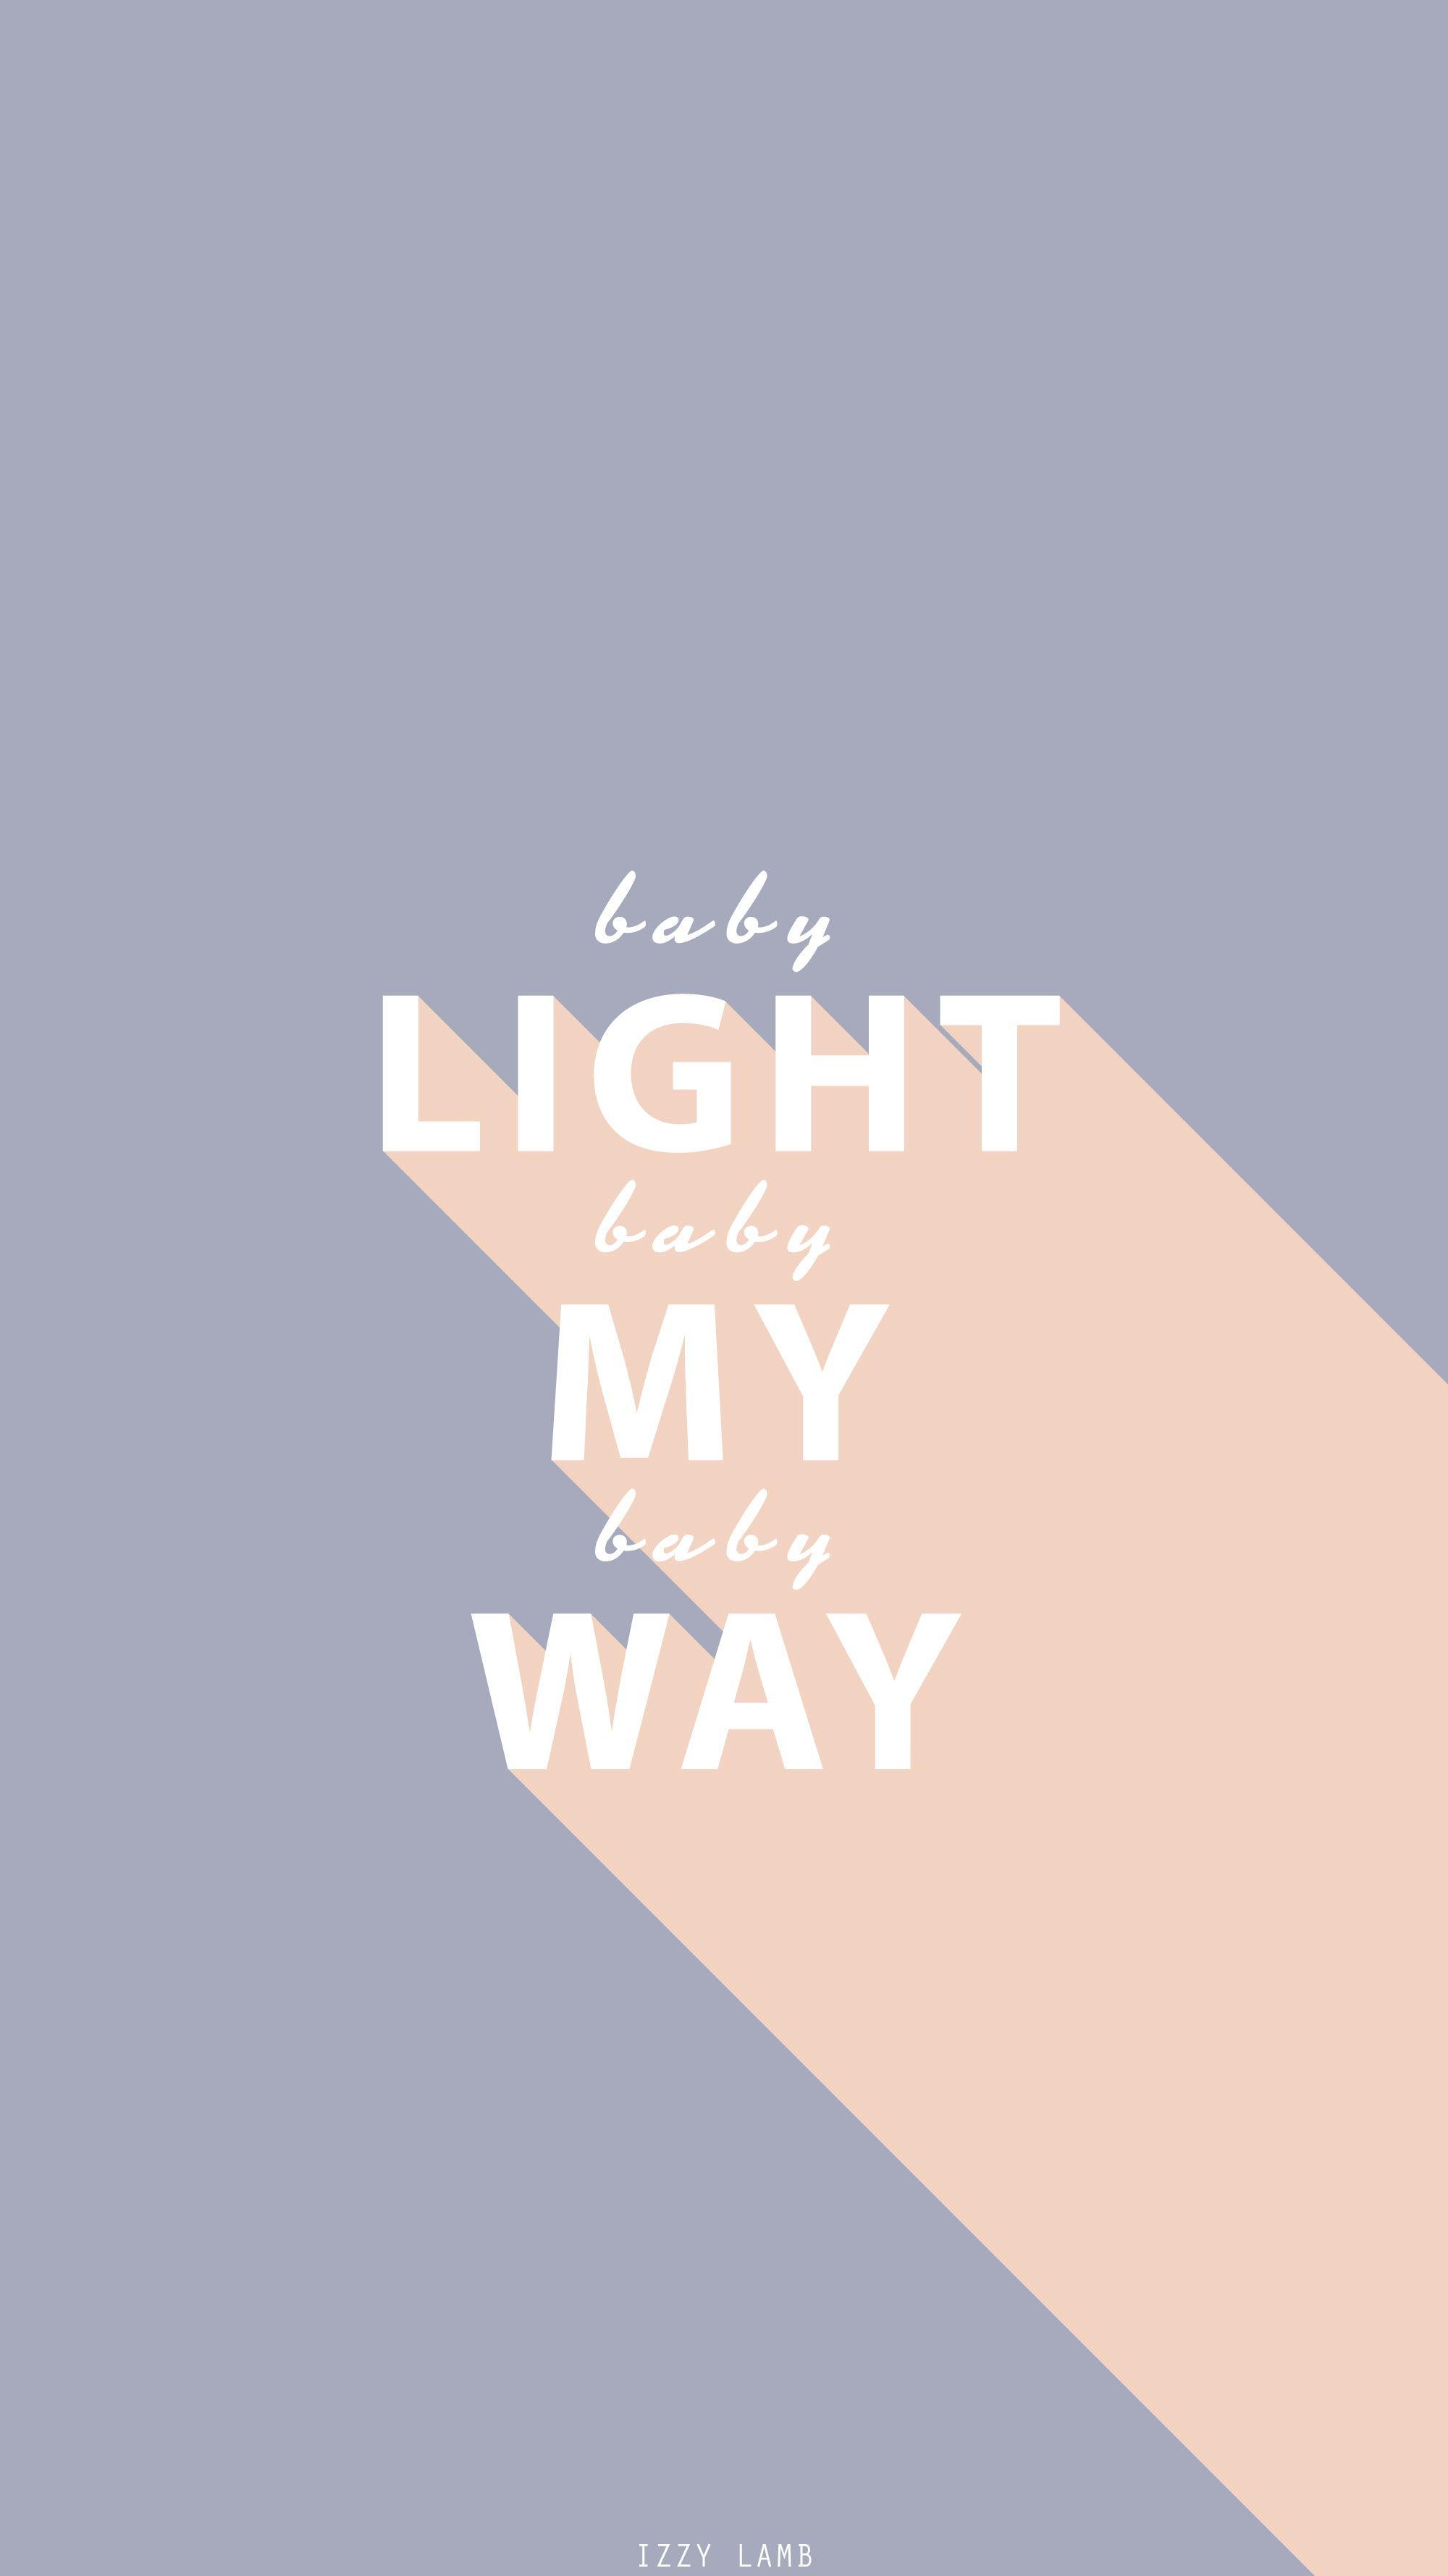 Ultra Violet (Light My Way) U2 graphic #u2 #bono #wallpaper #graphic